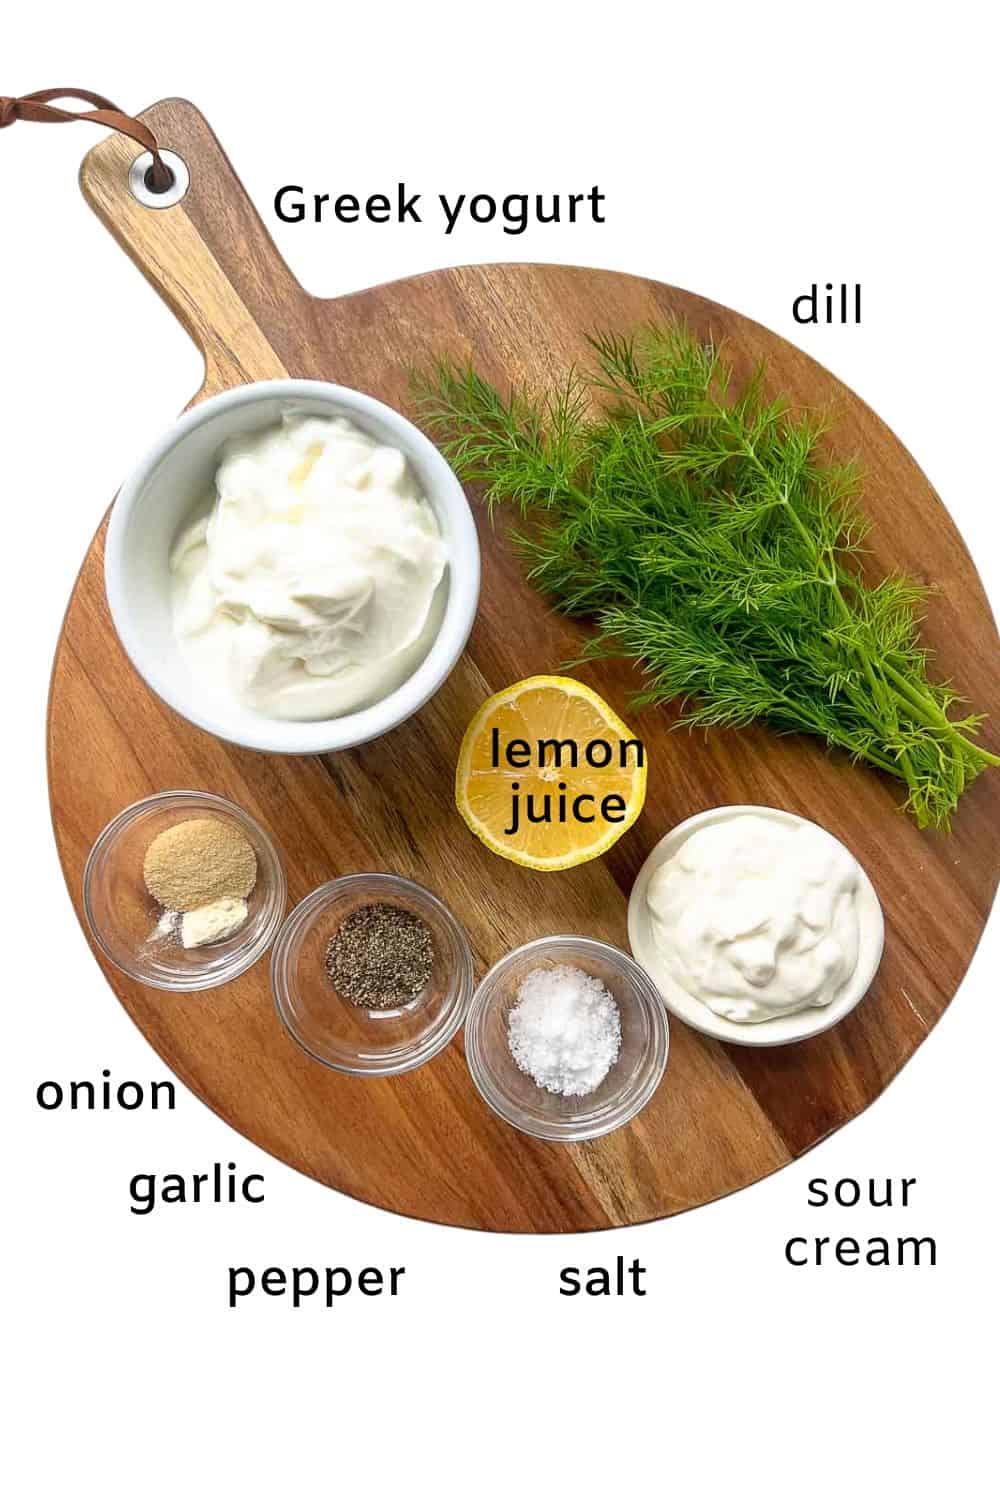 Labelled ingredients for Greek yogurt dill dip: Greek yogurt, dill, lemon juice, sour cream, onion and garlic powder, salt and pepper.